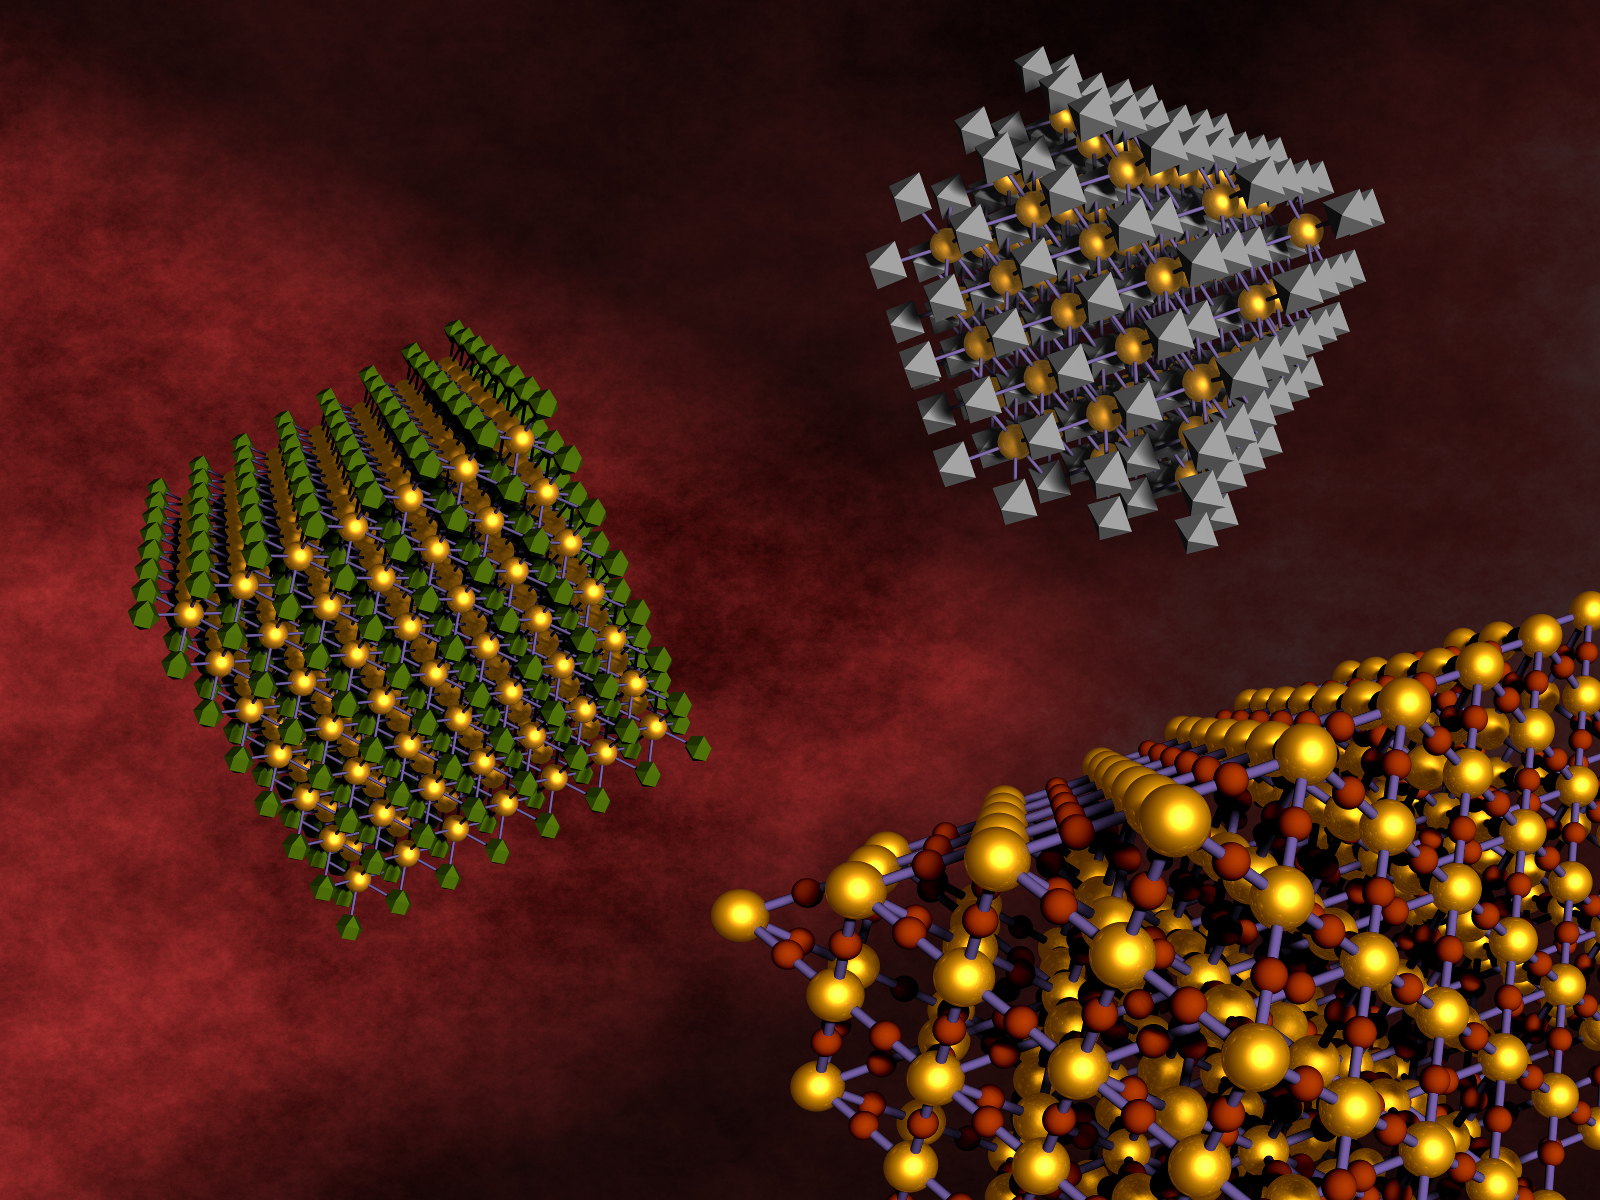 nanoparticle-arrays-hr (1)